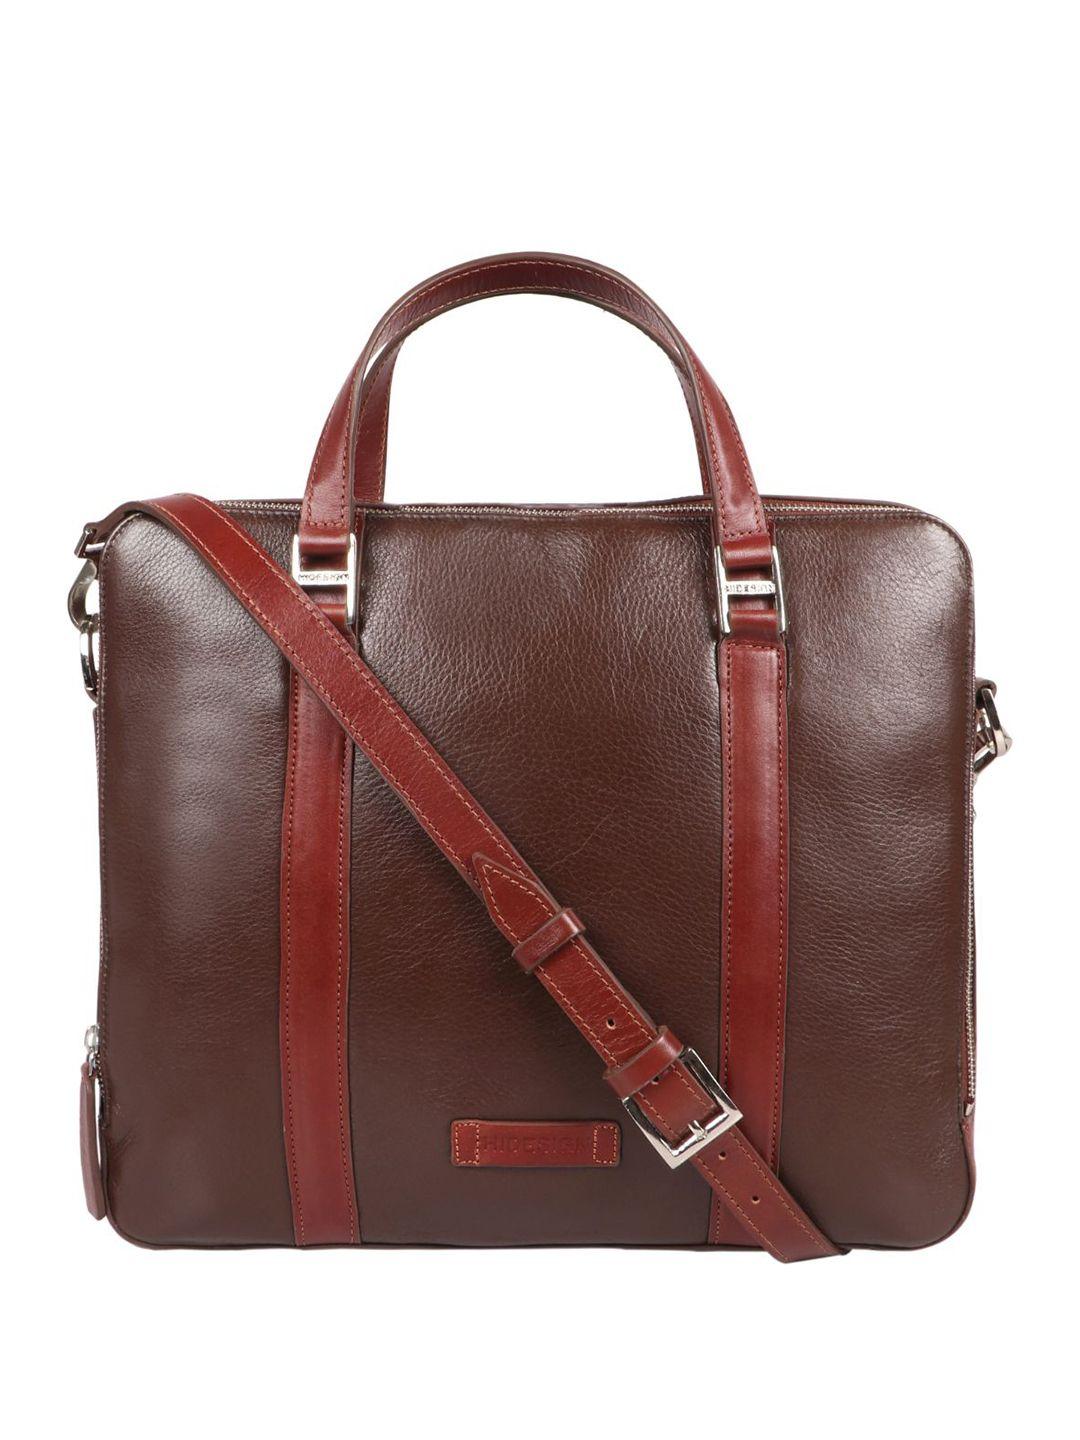 hidesign unisex textured leather messenger bag